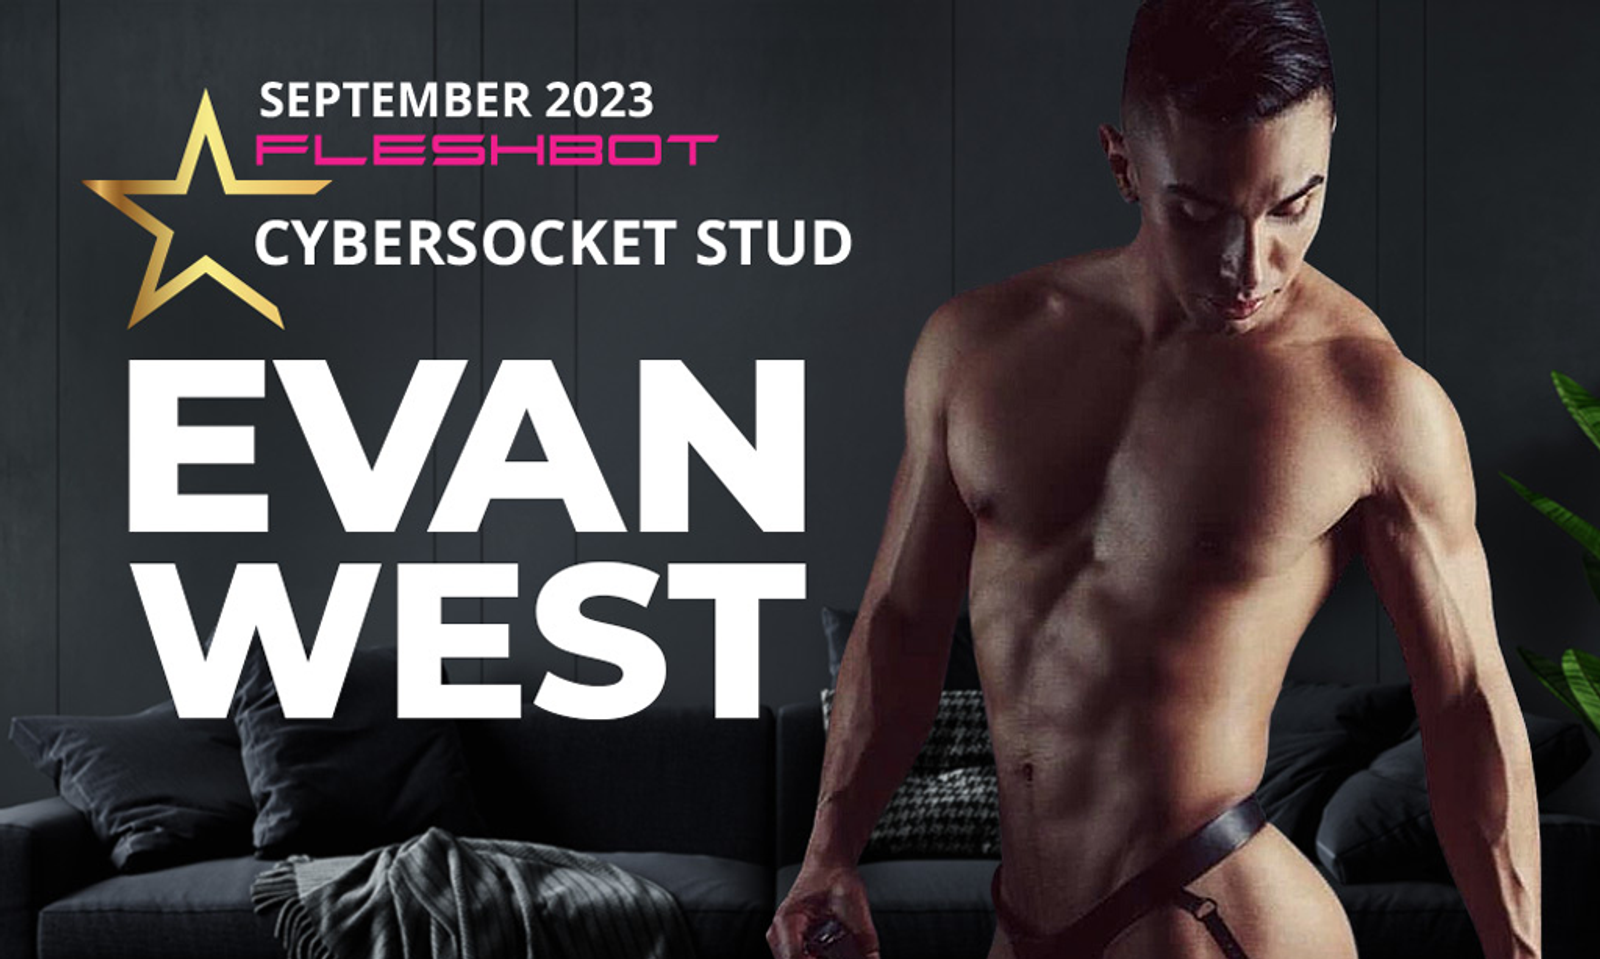 Evan West Named Cybersocket Stud for September 2023